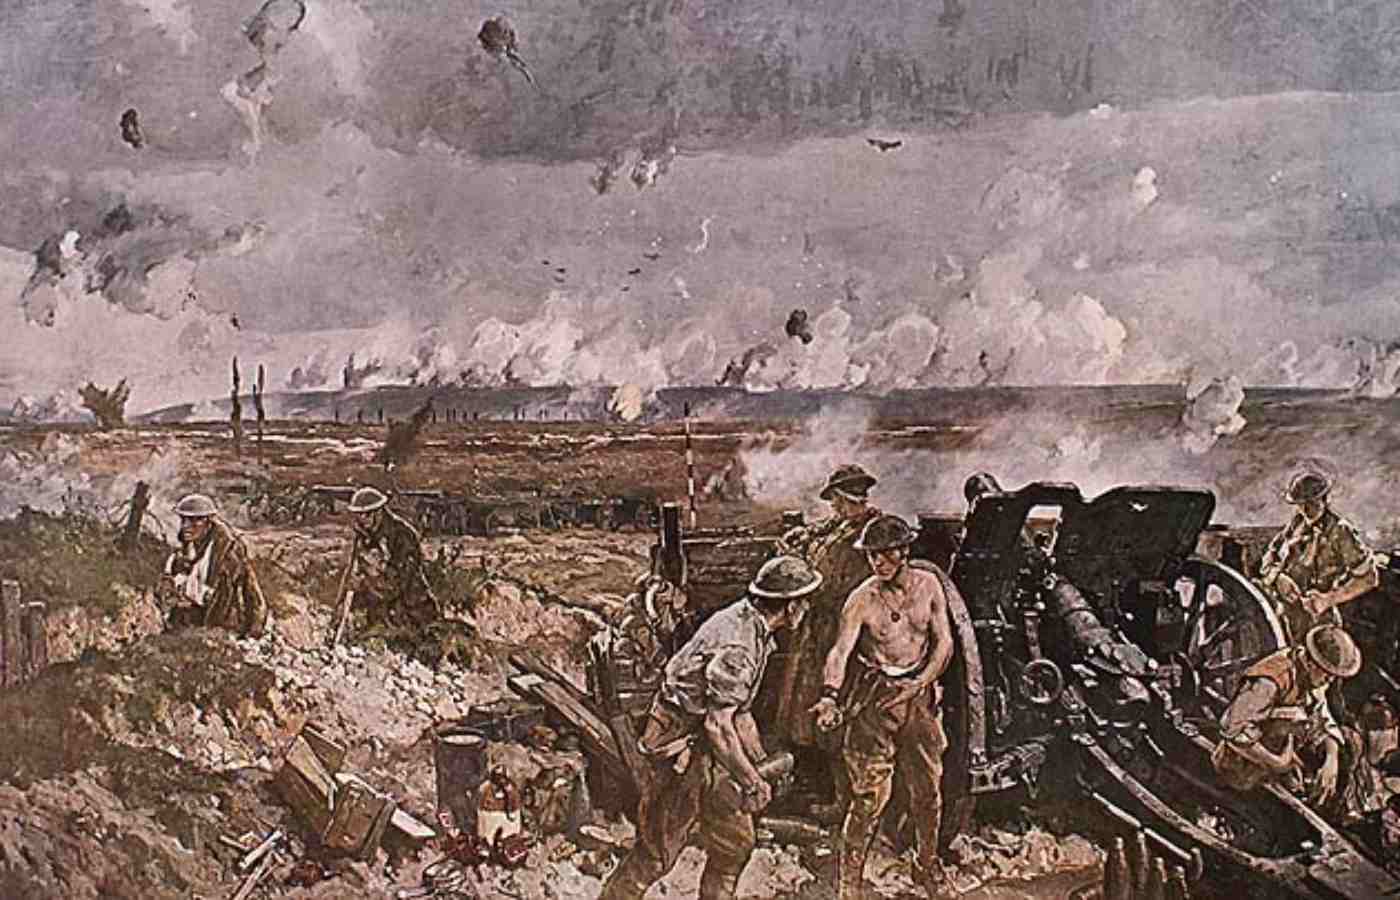 A war painting